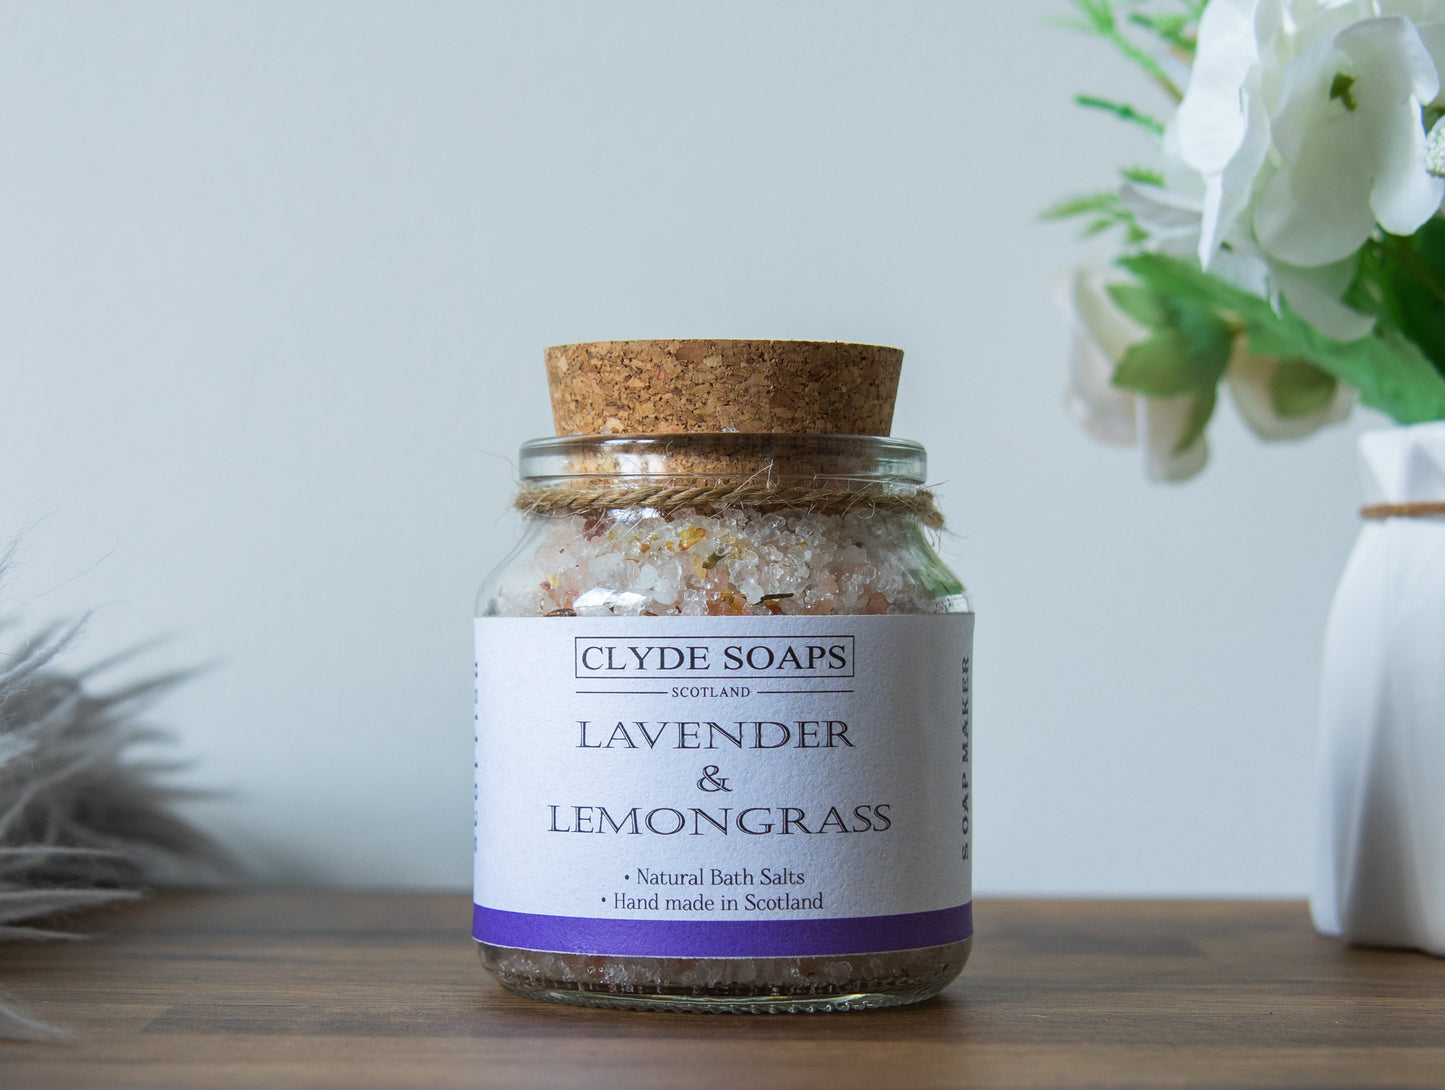 Lavender & Lemongrass Bath Salts, clyde soaps scotland